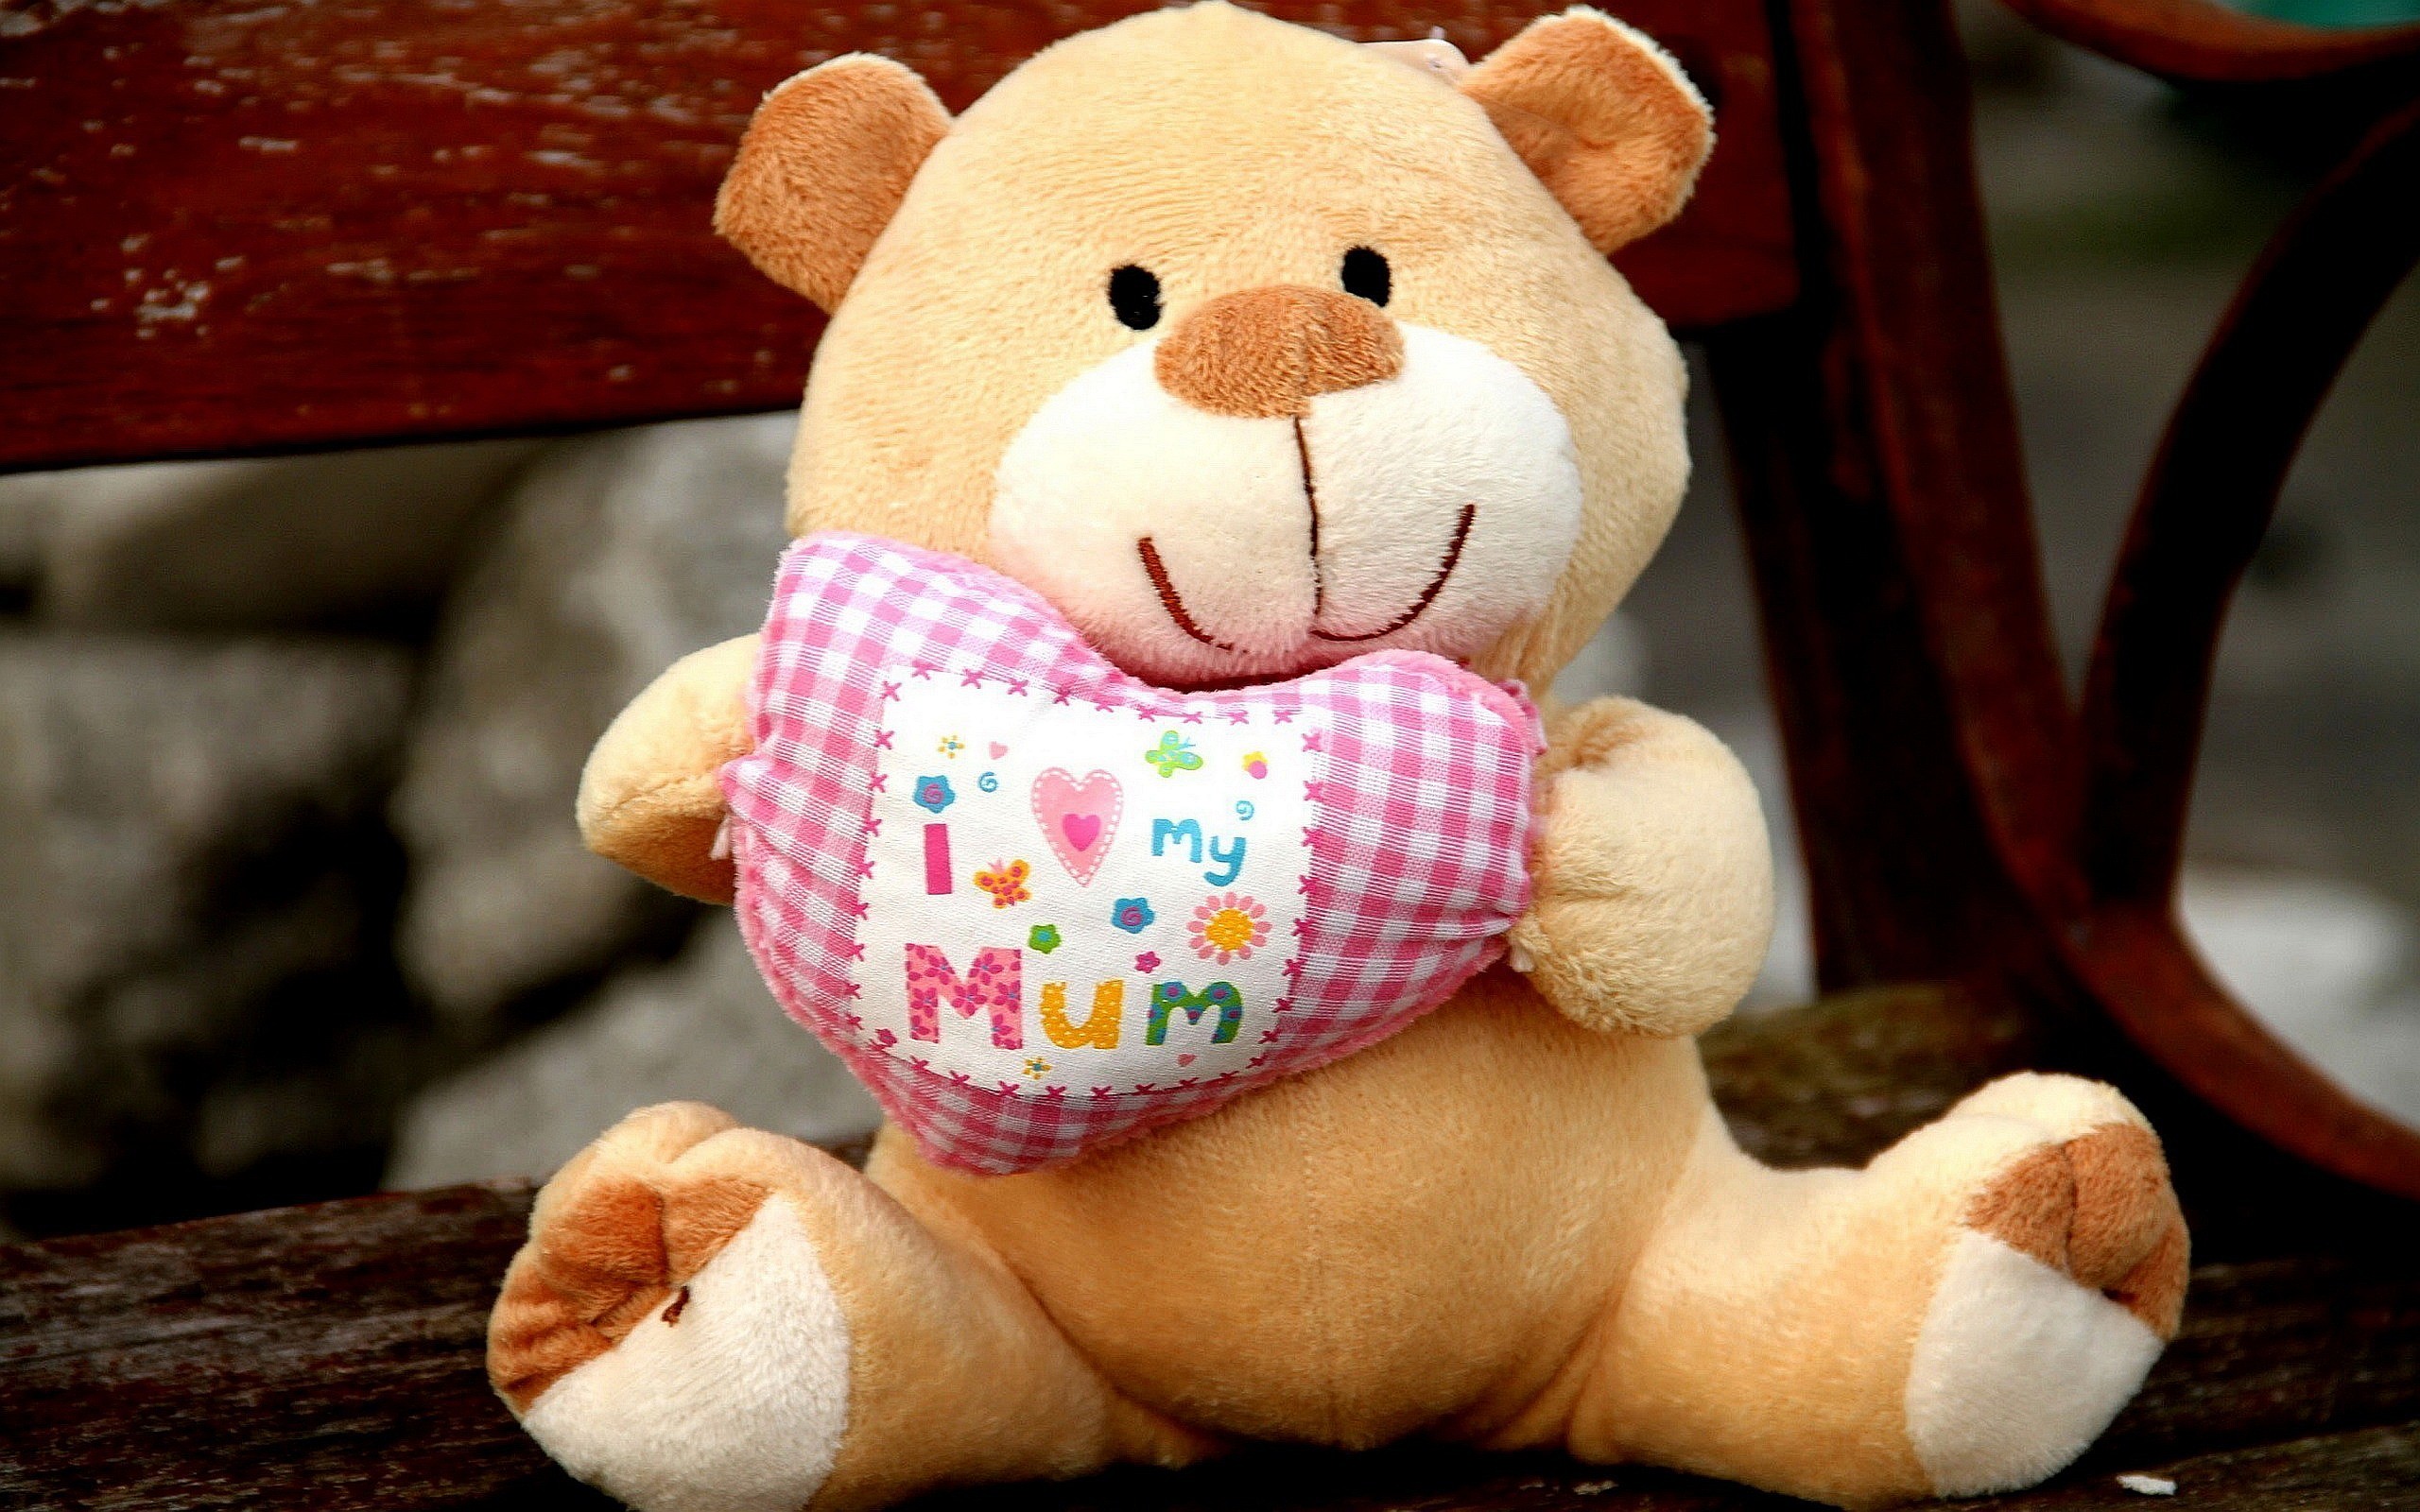 2560x1600 Cute teddy bear I love you mom